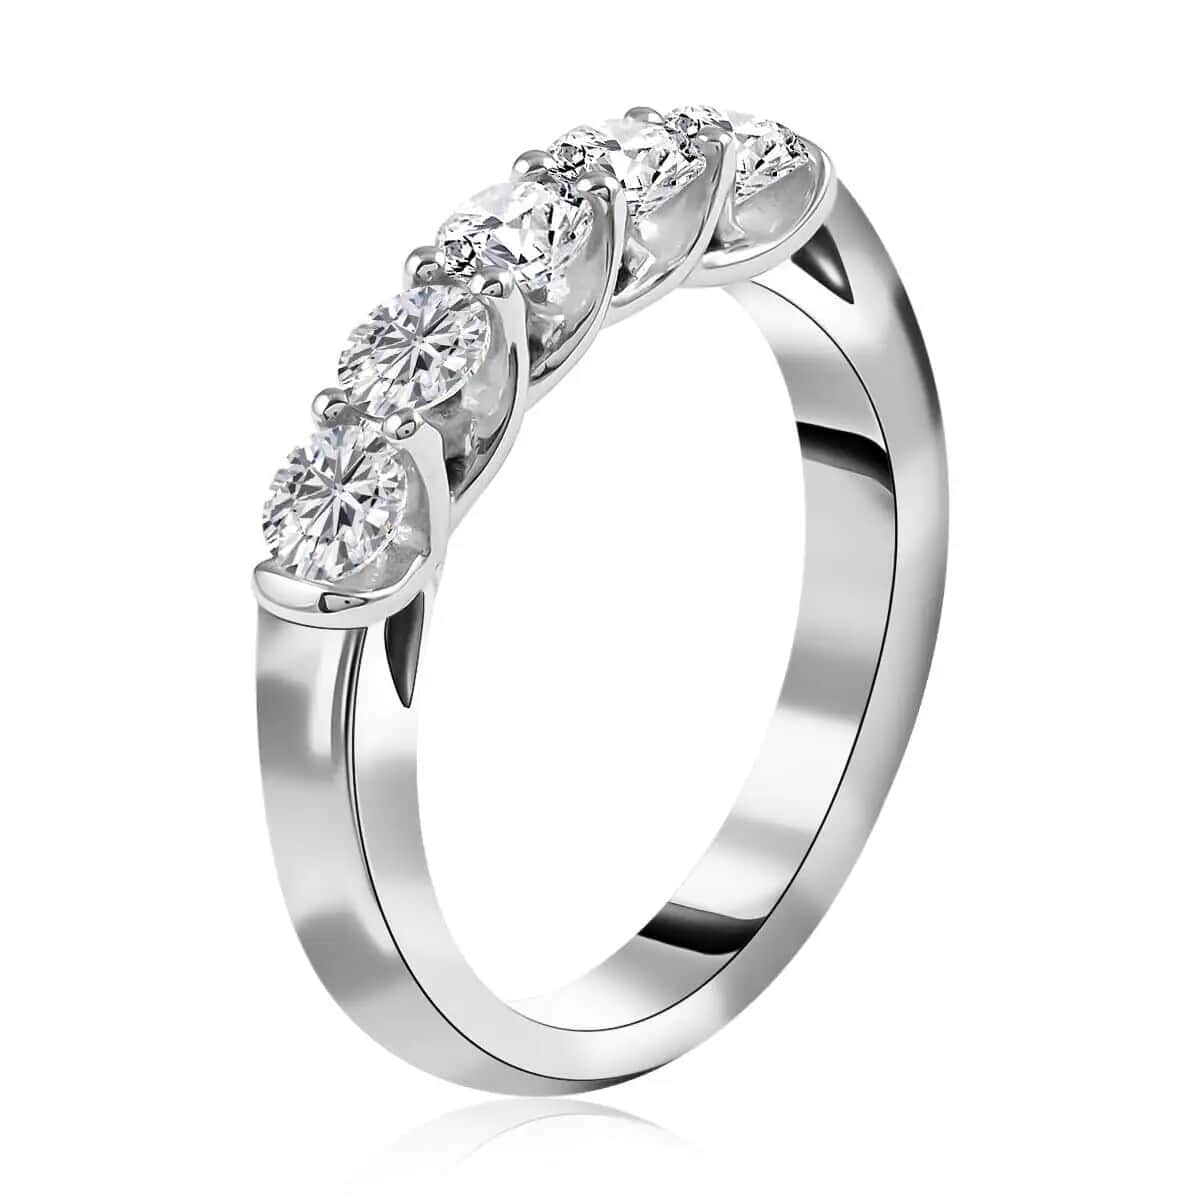 Modani 950 Platinum Natural Diamond G VVS2 Ring (Size 7.0) 8 Grams 1.00 ctw image number 5